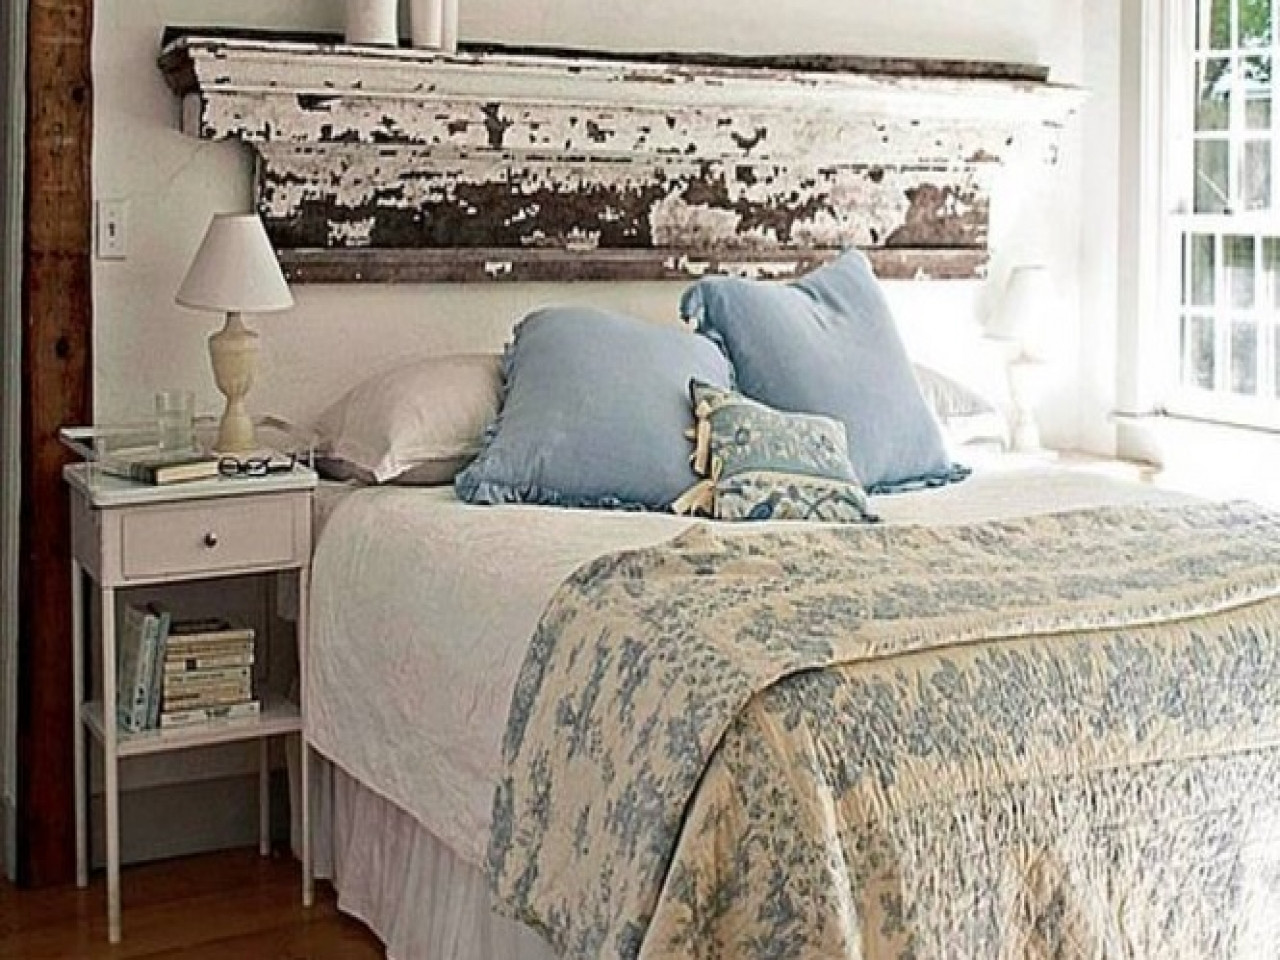 Best ideas about Rustic Bedroom Ideas DIY
. Save or Pin Awesome 20 Rustic Bedroom Ideas for Your Home Dap fice Now.